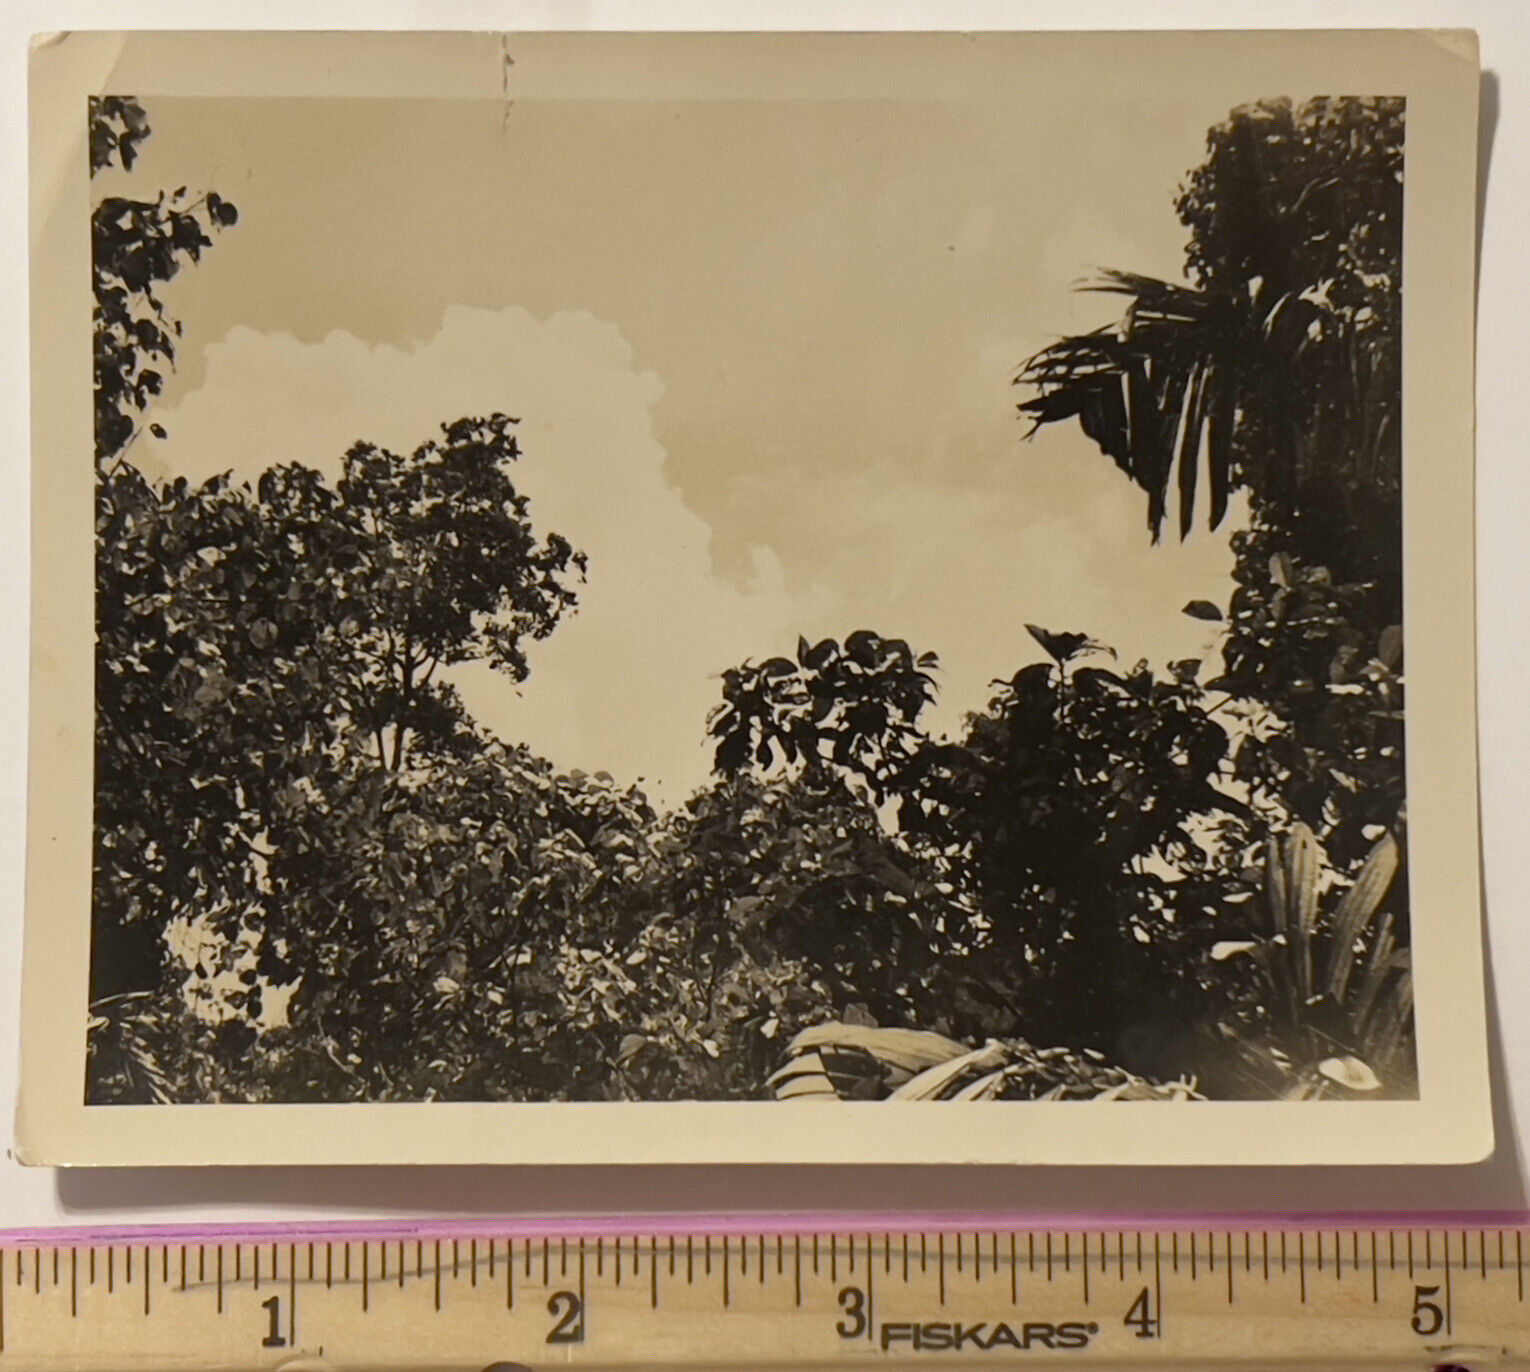 RARE WWII KODAK KODATONE ORIGINAL B&W PHOTOGRAPH TREES CLOUDS 5 X 3.75 INCHES